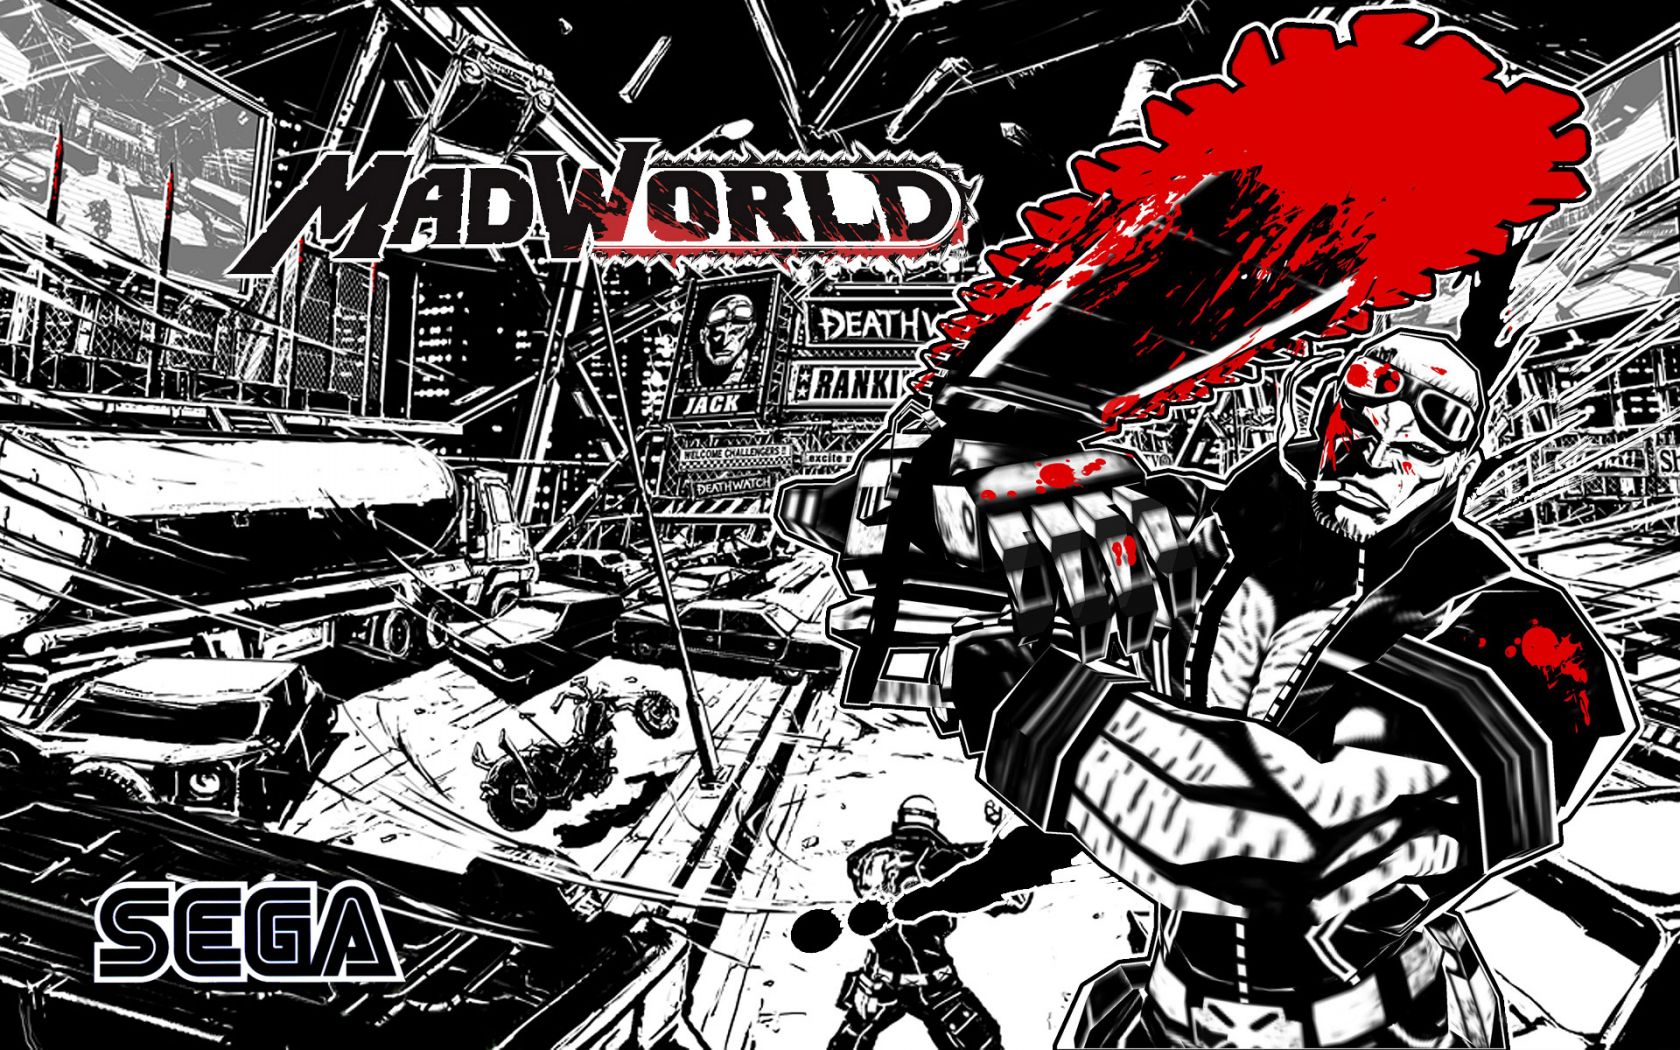 Sega Mad World Wallpaper